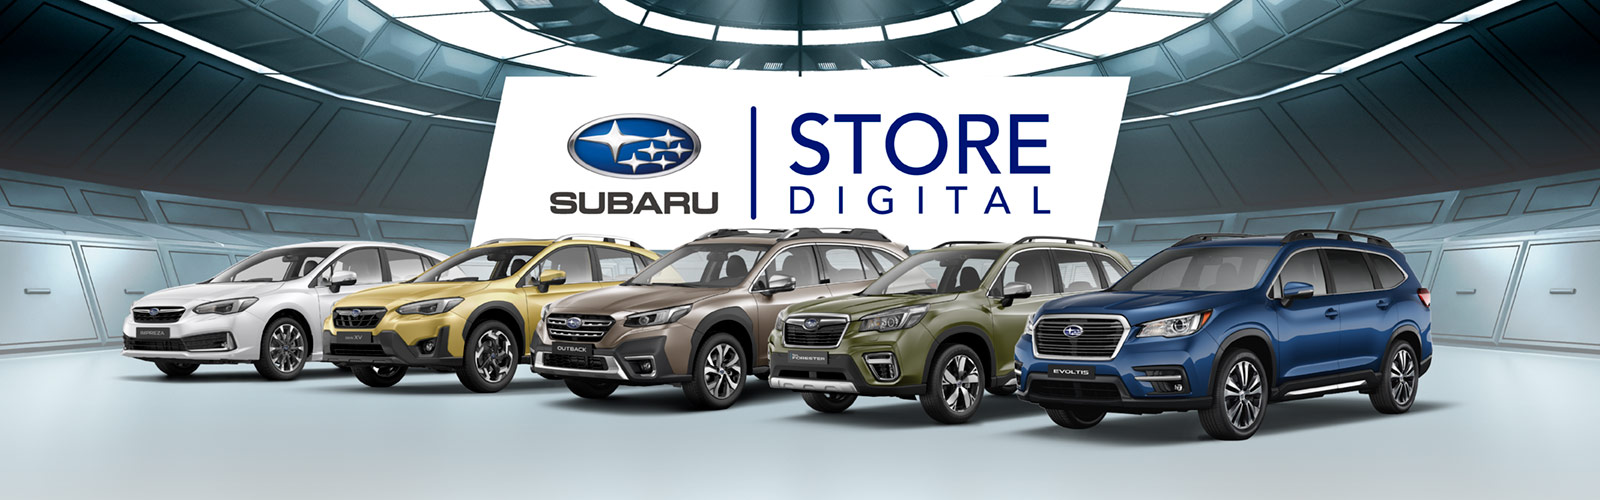 Subaru Store